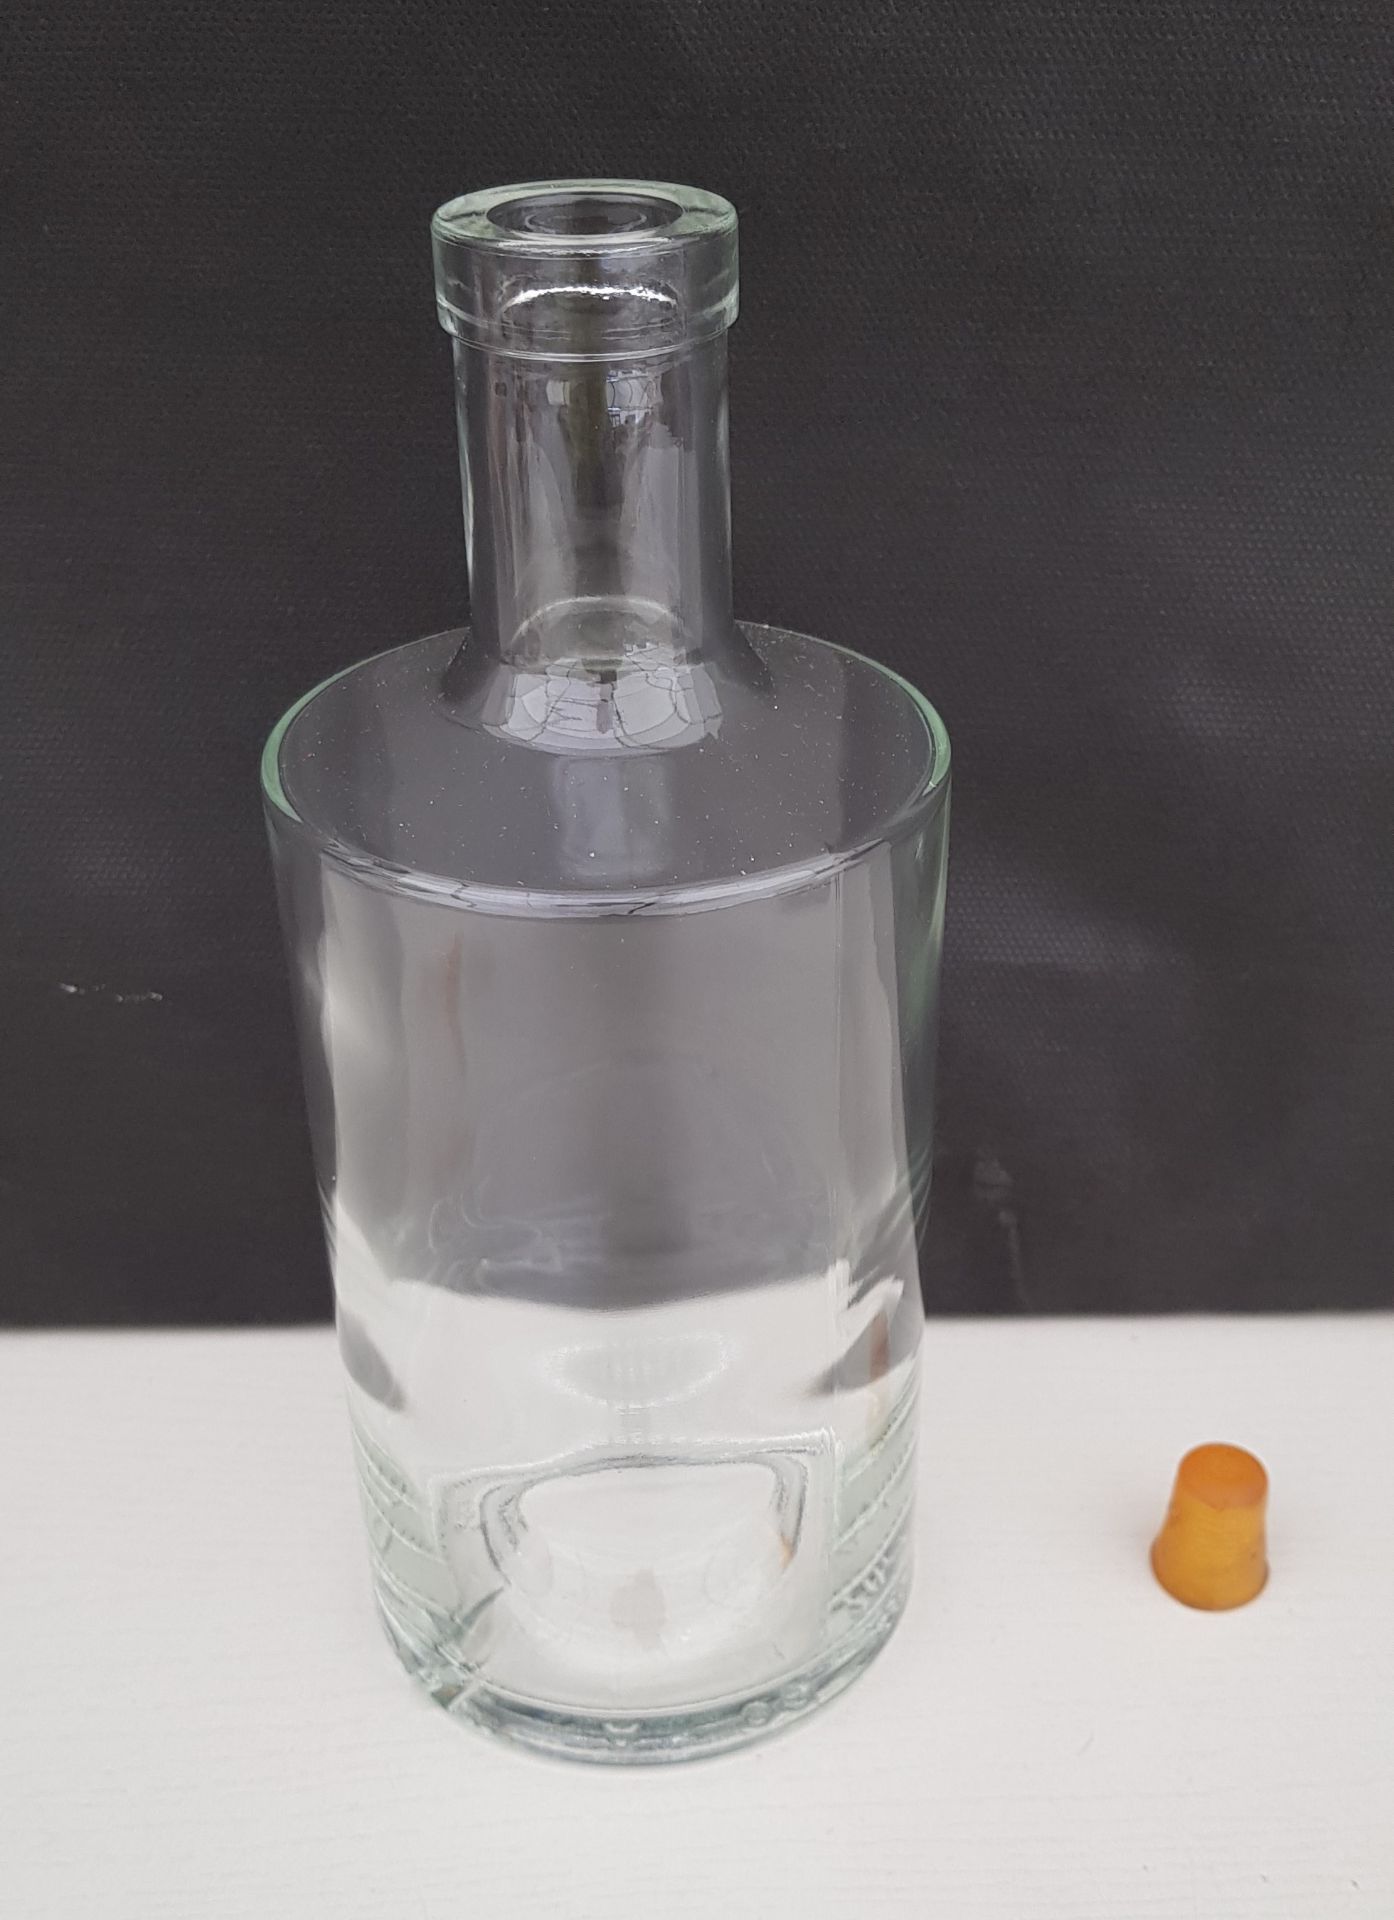 400 X BRAND NEW BRUNI GLASS BELLEVILLE CORK MOUTH GLASS BOTTLES 700ML (HEIGHT 21CM) ON 1 PALLET